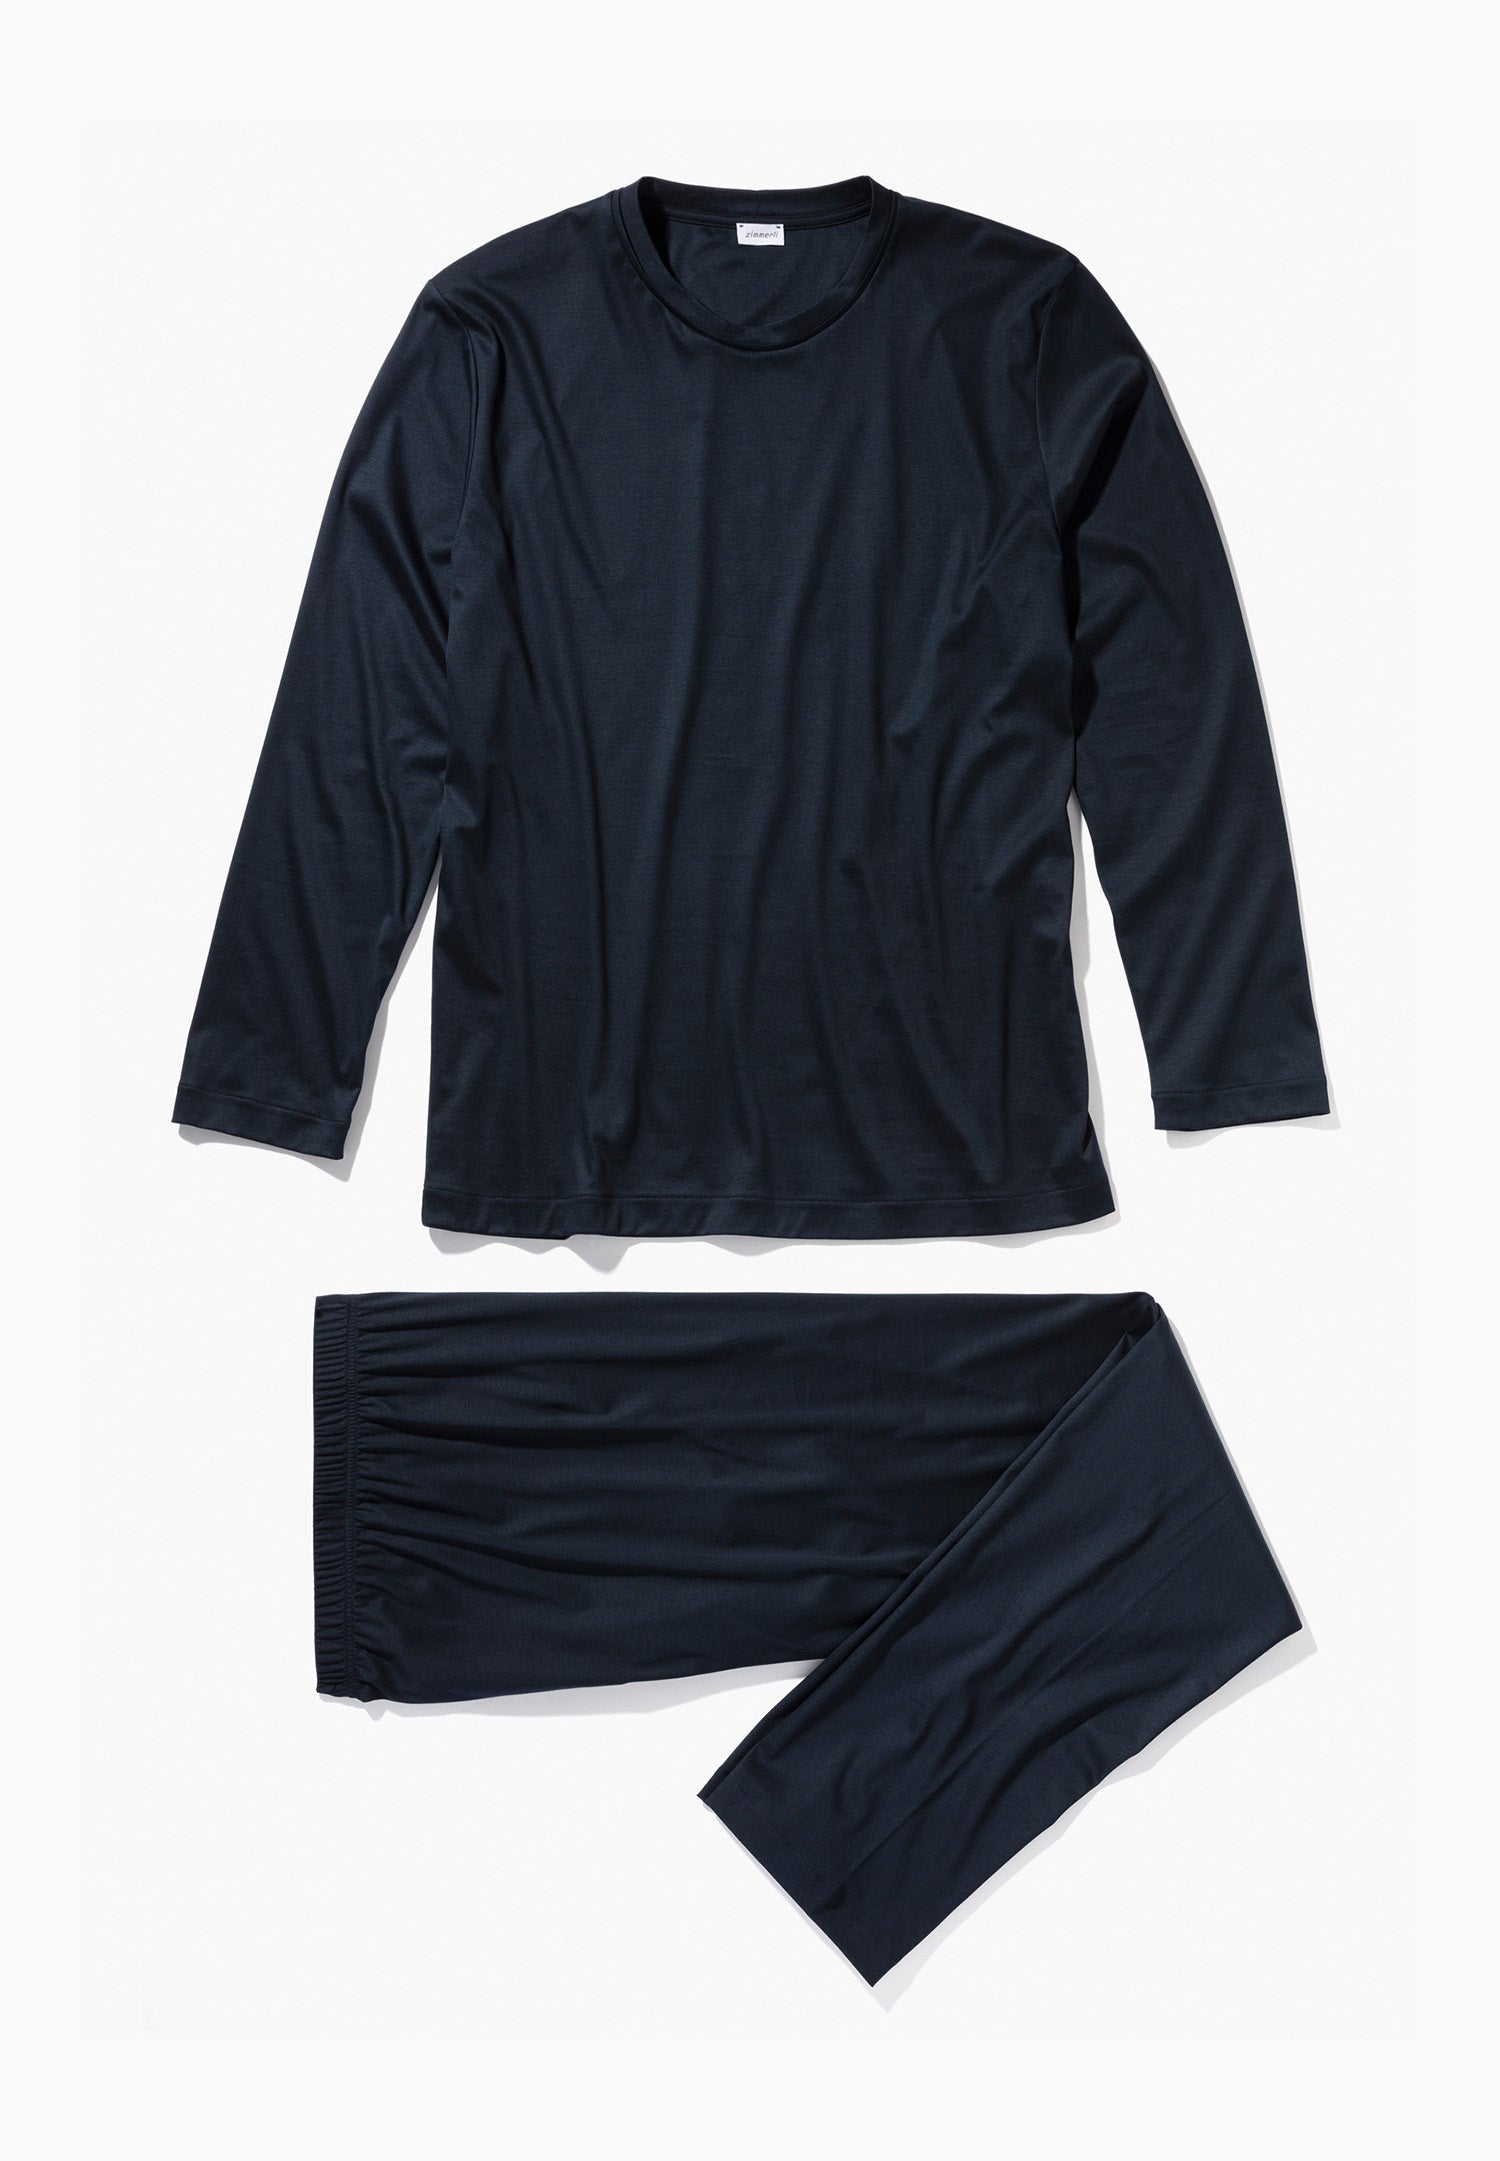 Black A Long Sleeve Shirt Pyjamas, Lingerie